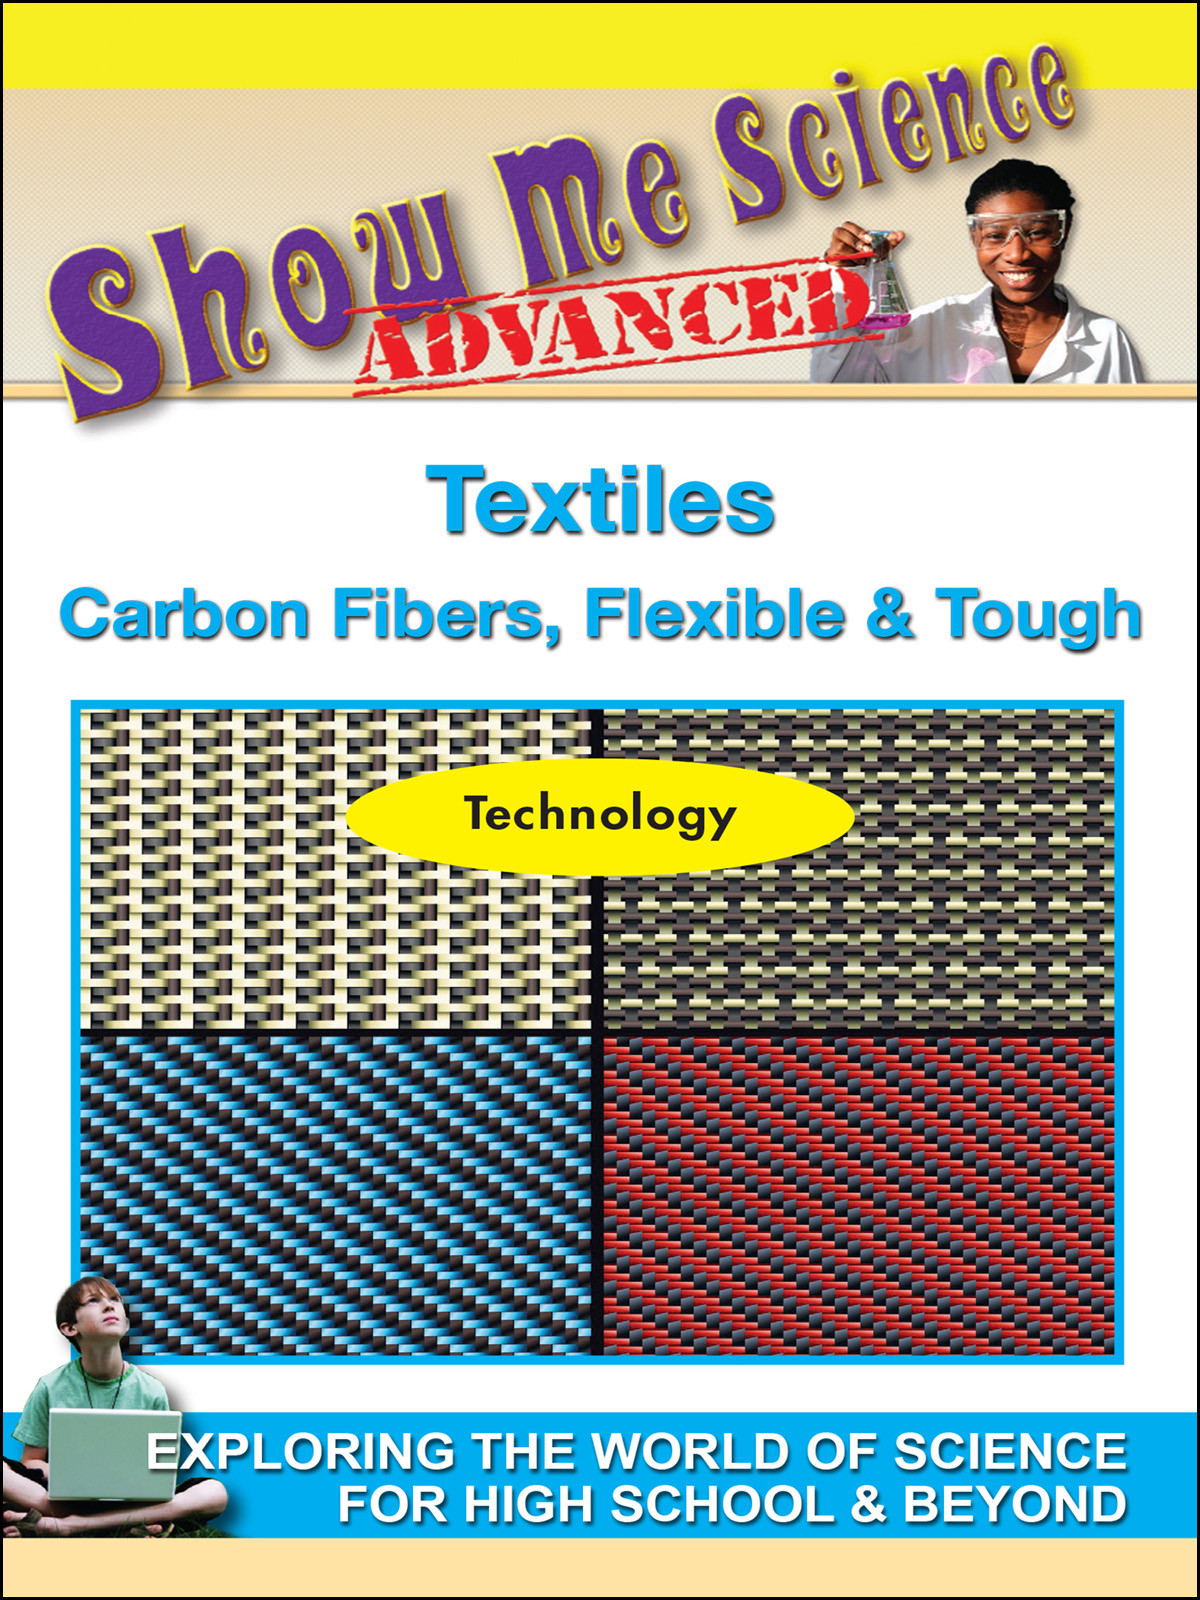 K4611 - Textiles Carbon Fibers, Flexible & Tough